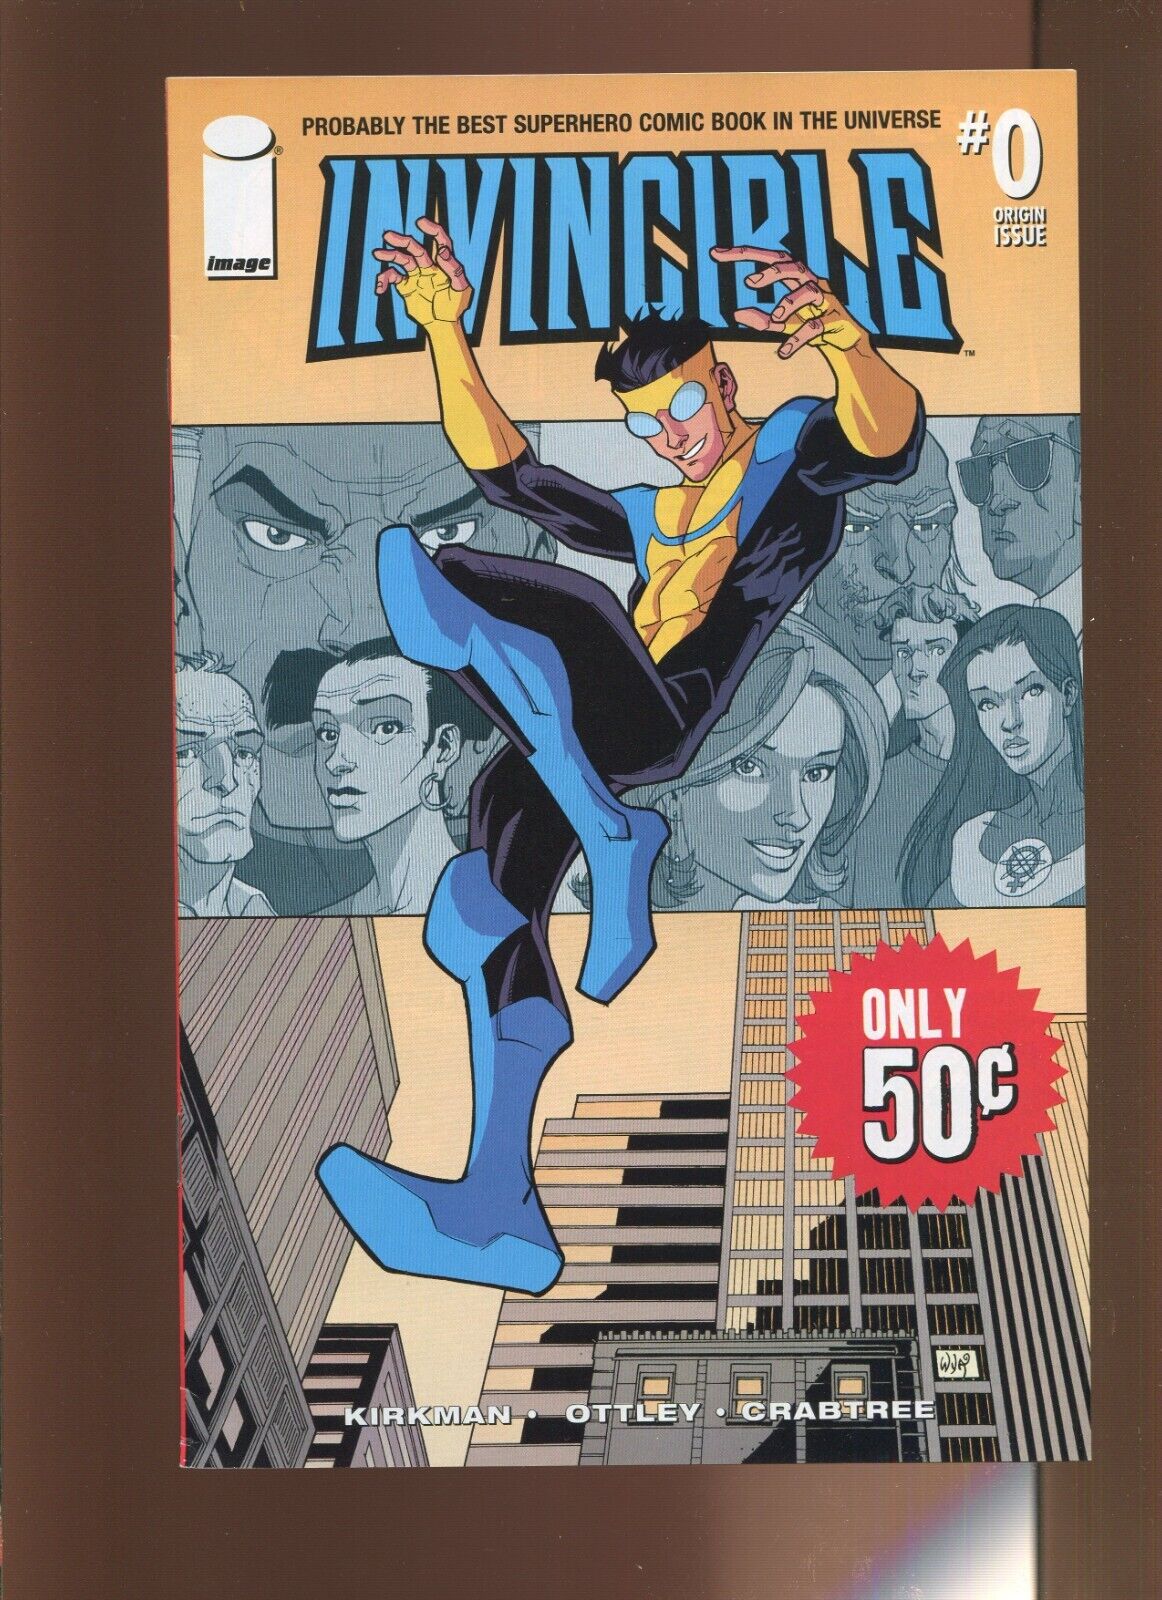 Invincible #0 - Origin Issue. Ryan Ottley Cover and Interiors.  (9.0/9.2) 2000